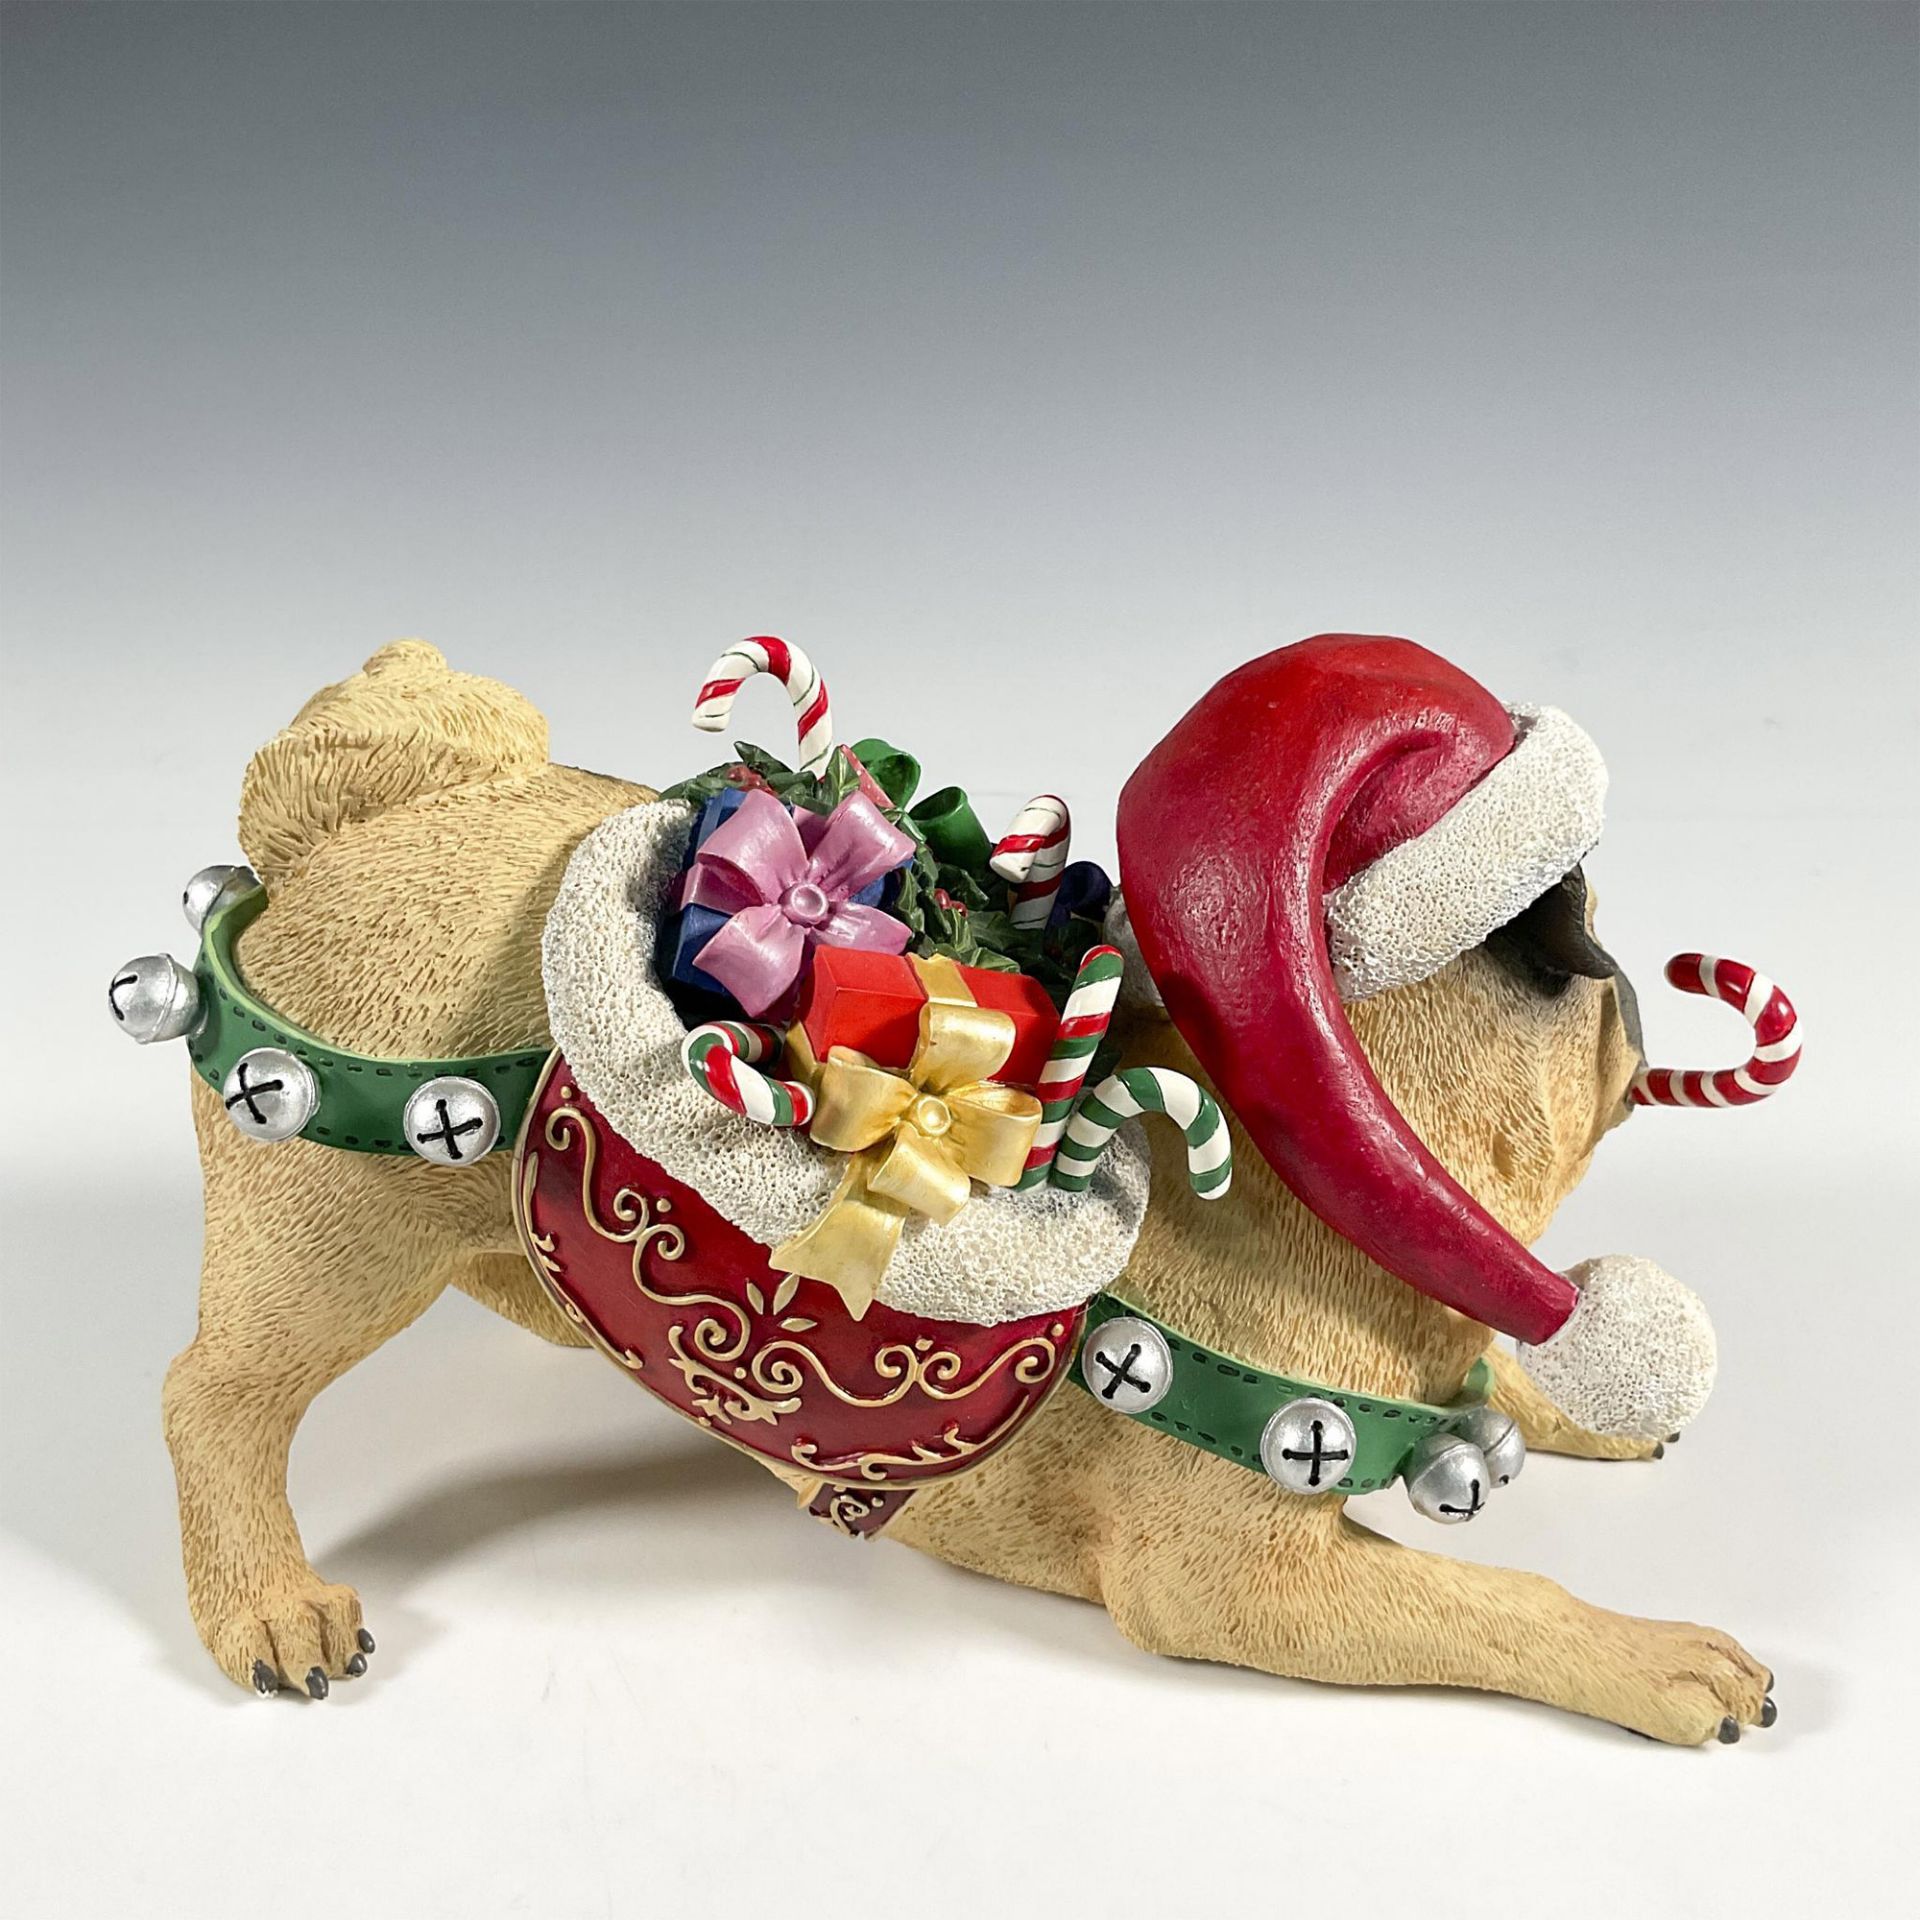 Danbury Mint Resin Figurine, Christmas Pug - Image 2 of 4